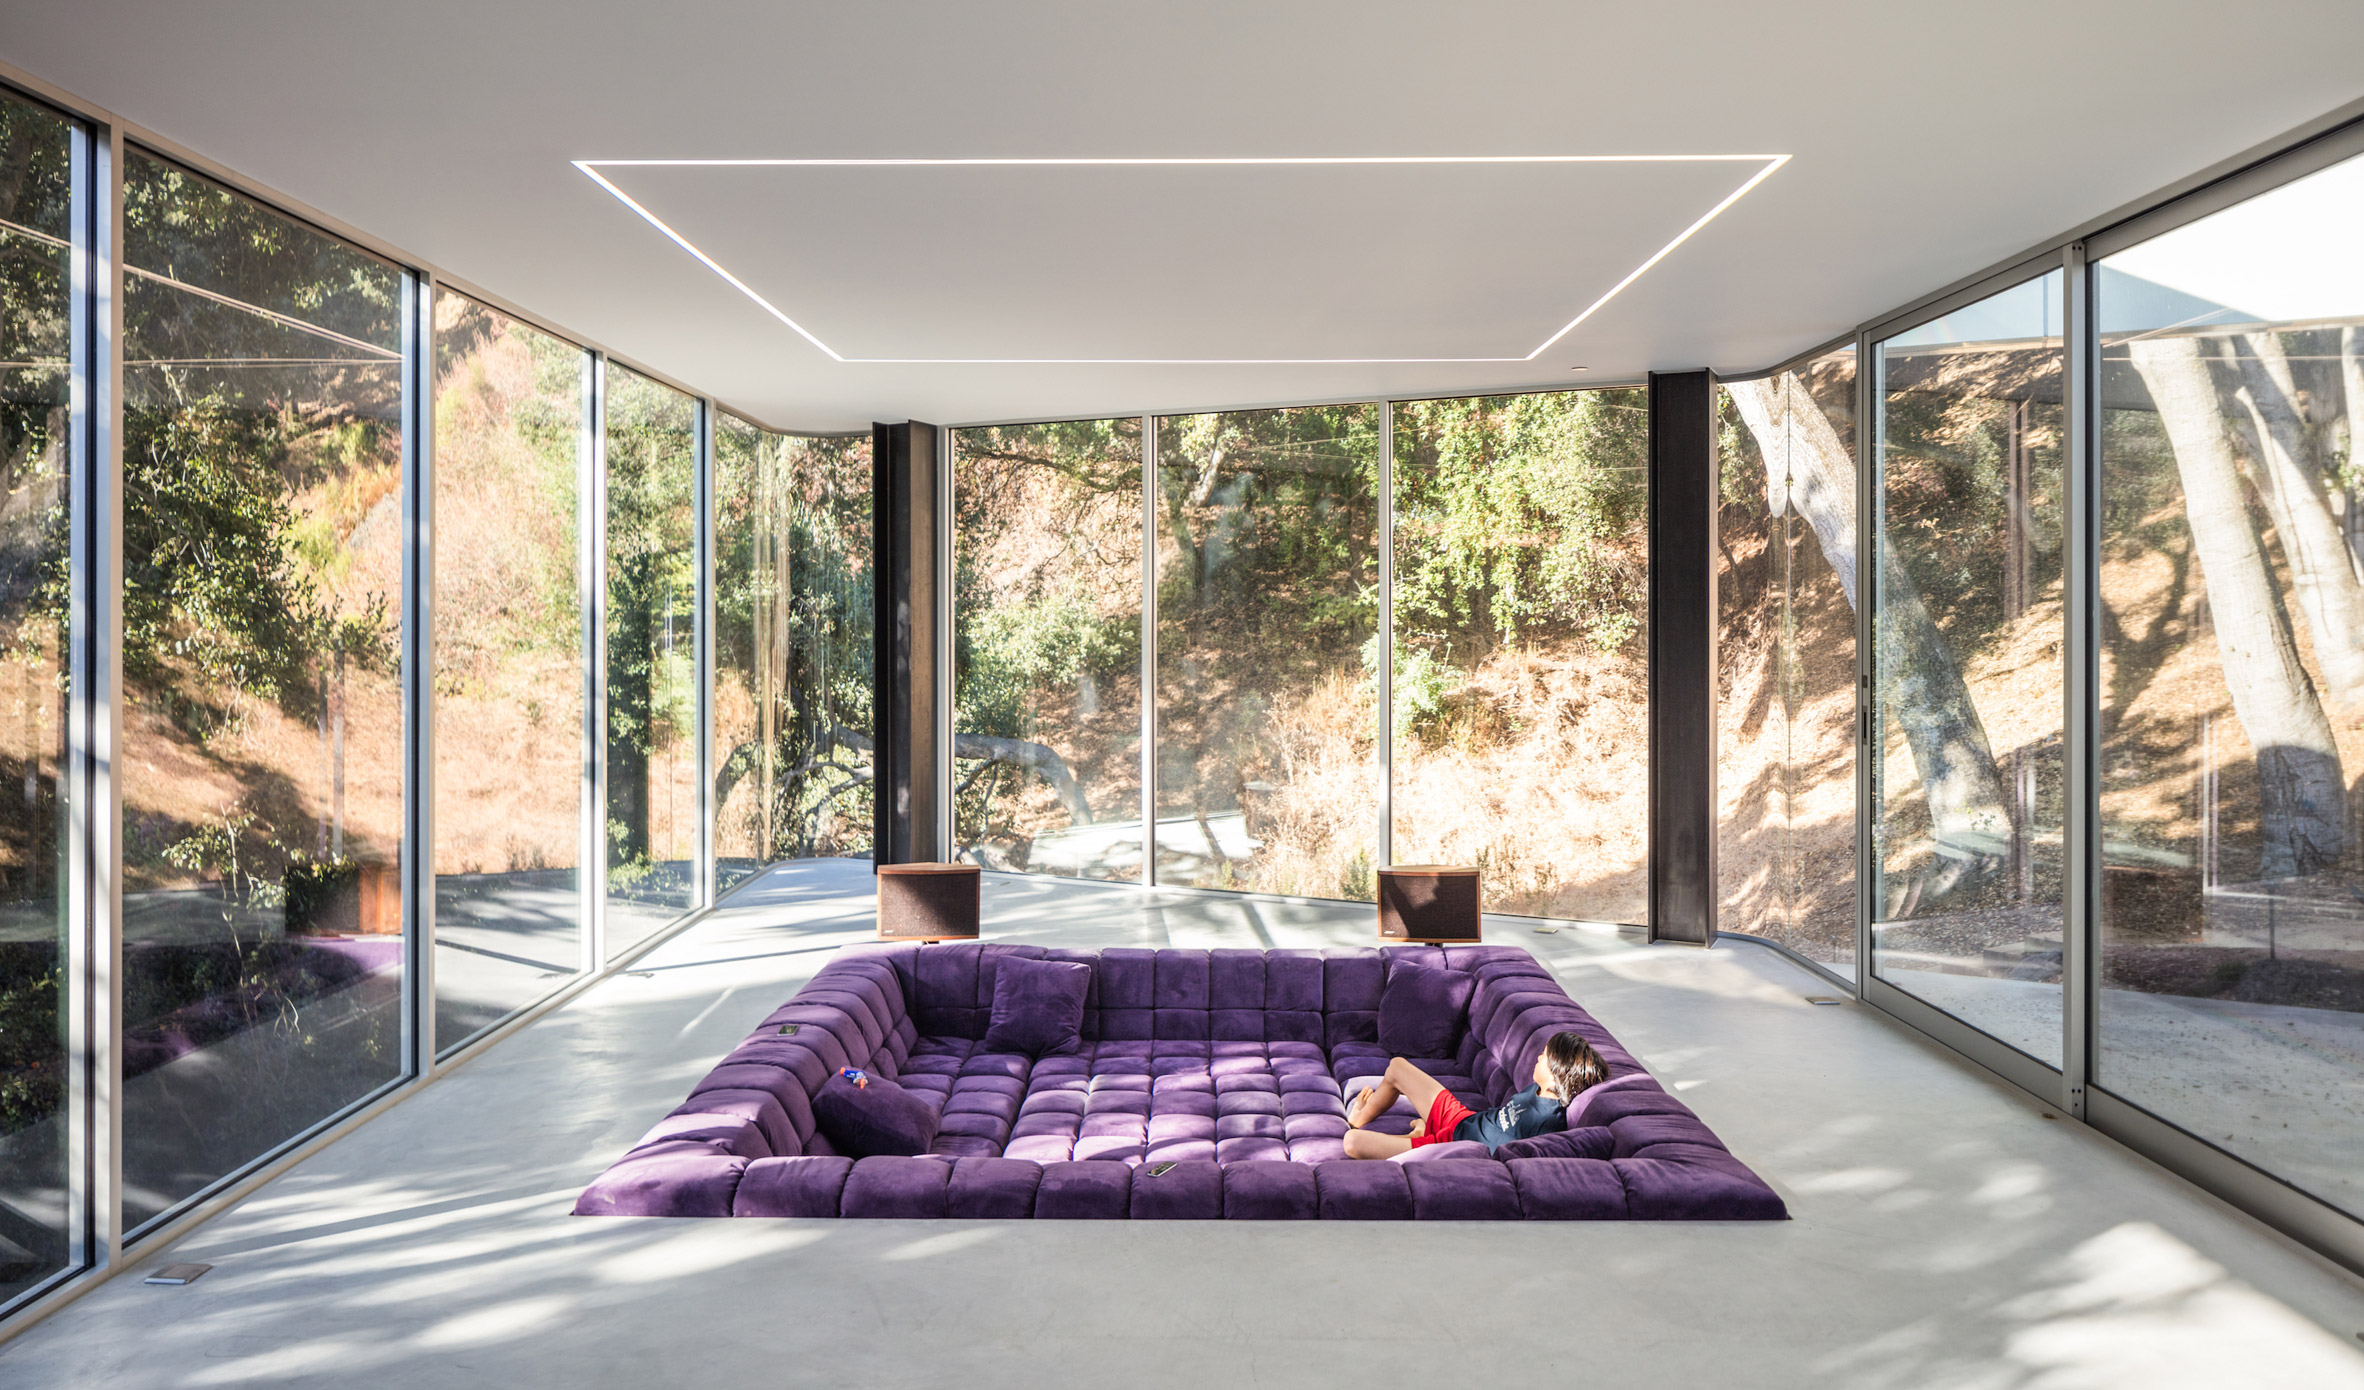 Purple conversation pit by Craig Steely Architecture